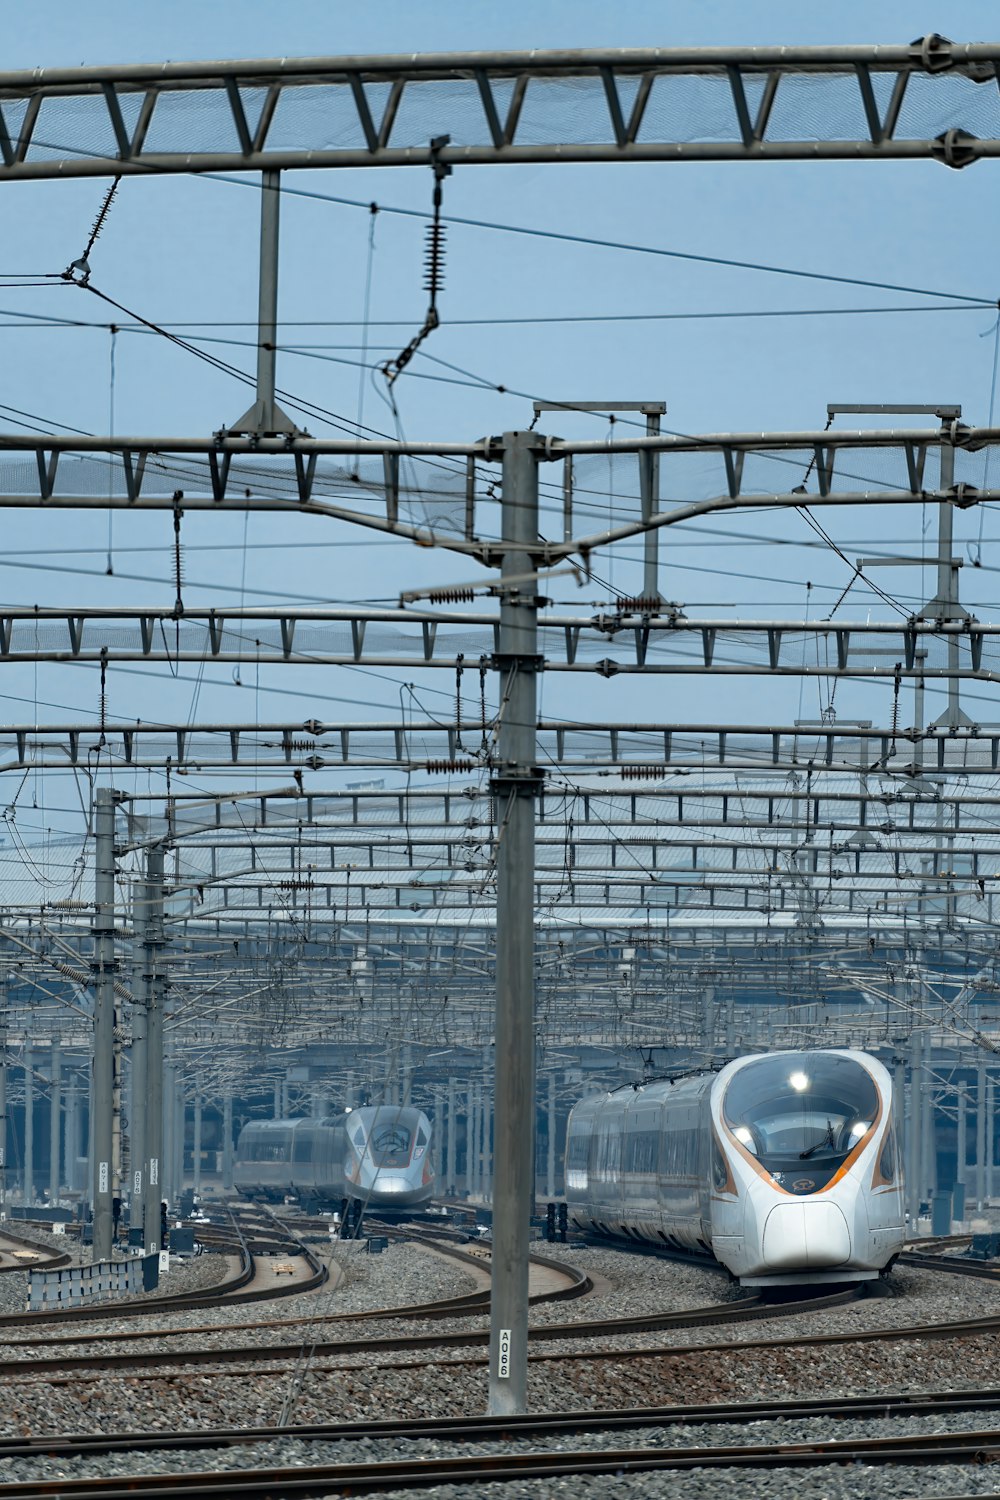 a silver train traveling down train tracks under a blue sky